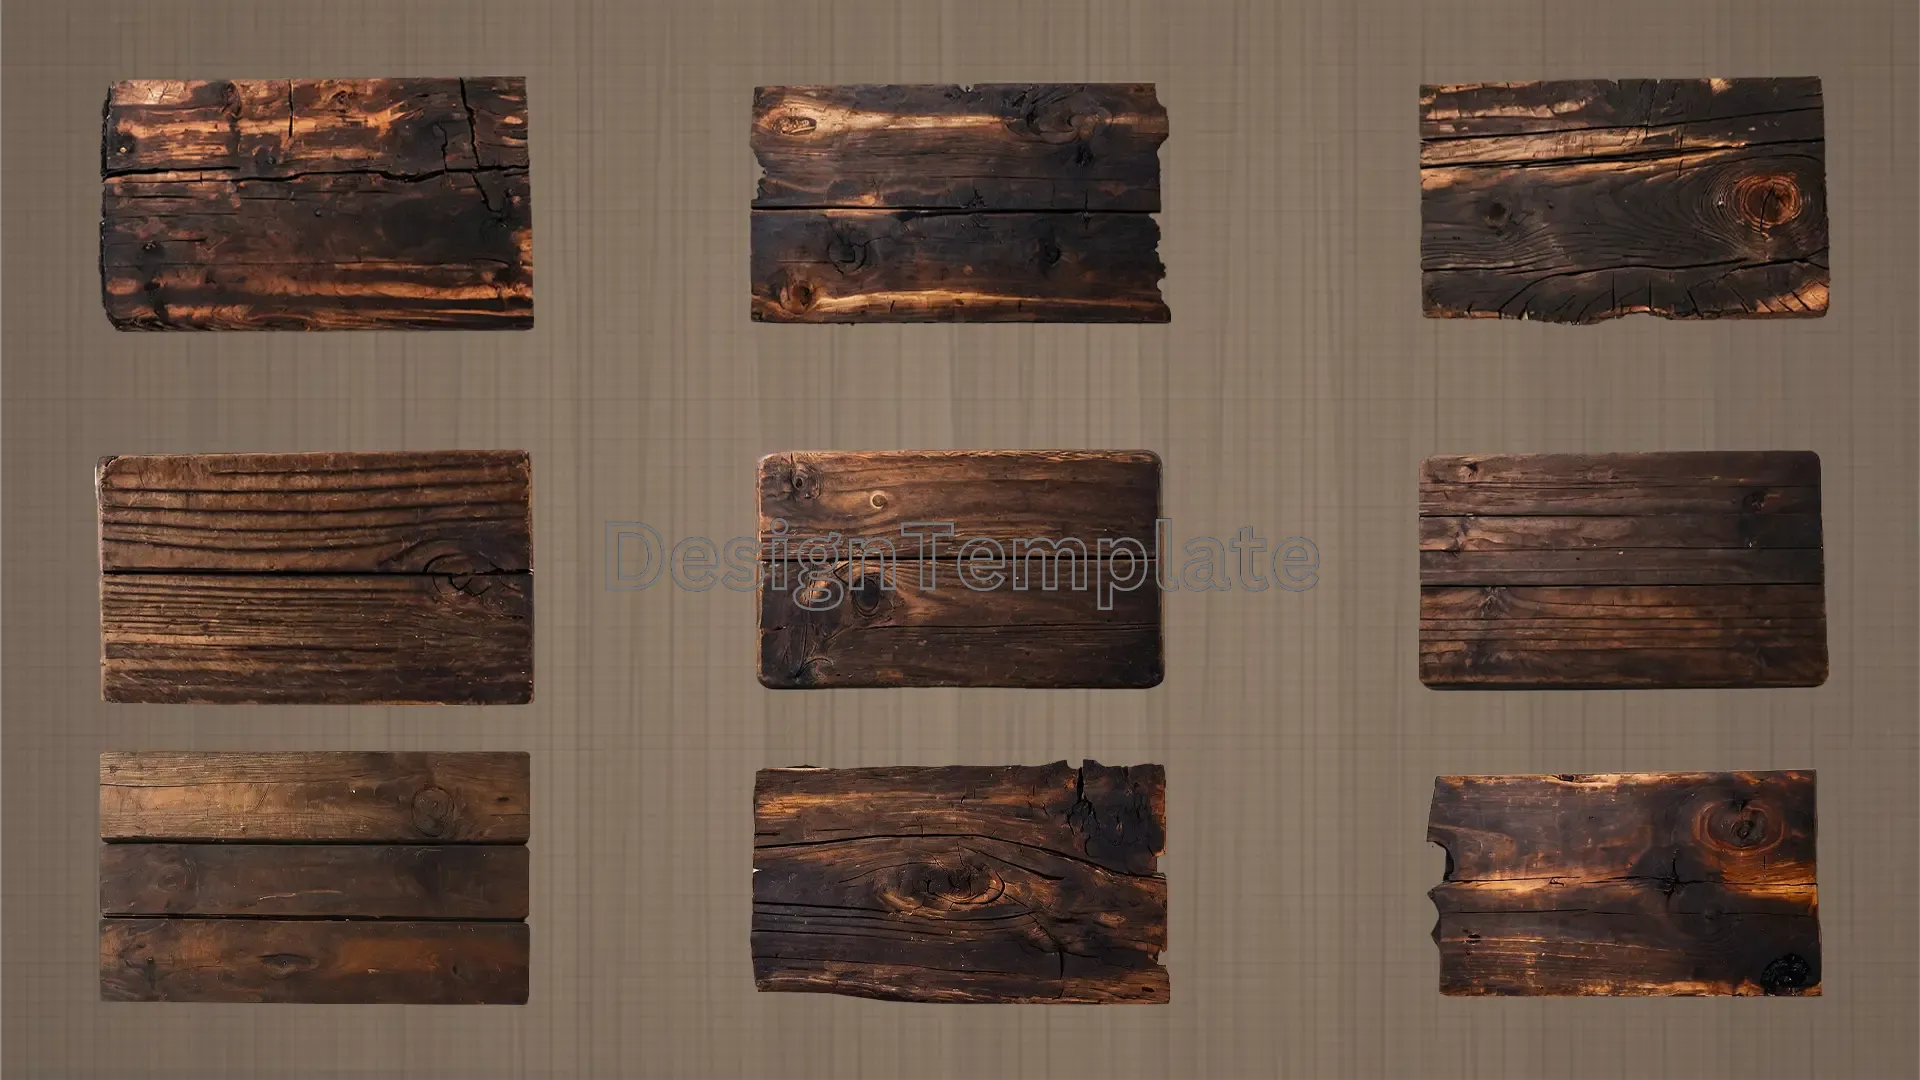 Authentic Wooden Rustic Signboard 3D Elements